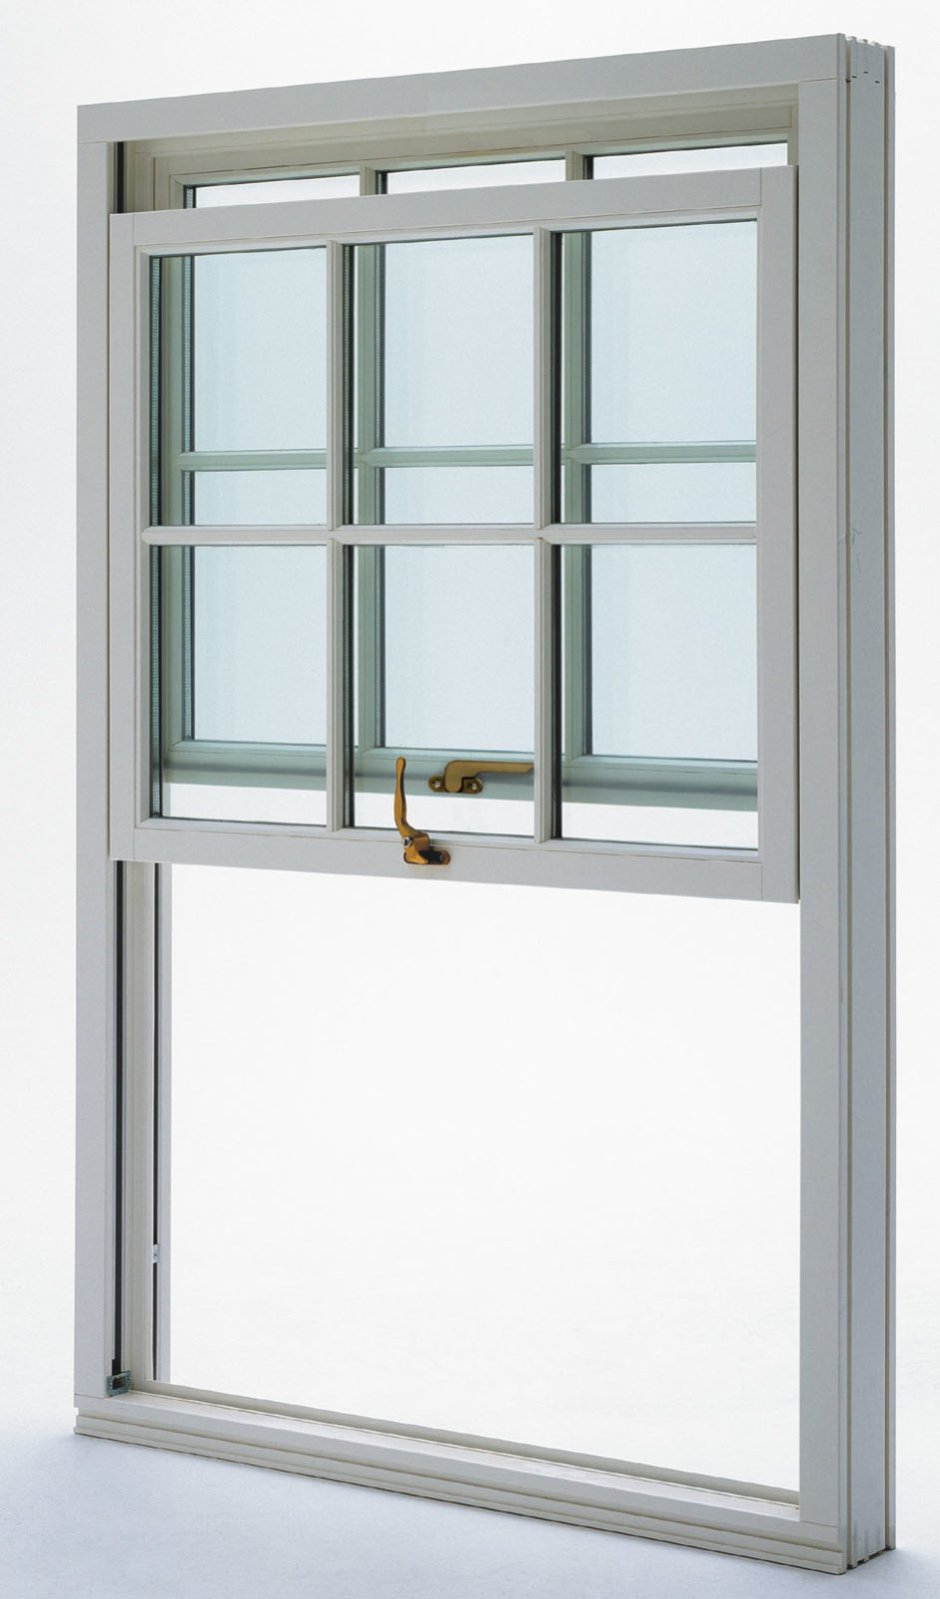 Окно из алюминиевого профиля (система МП-65, стеклопакет 4м 1-10-4м 1-10-4м)